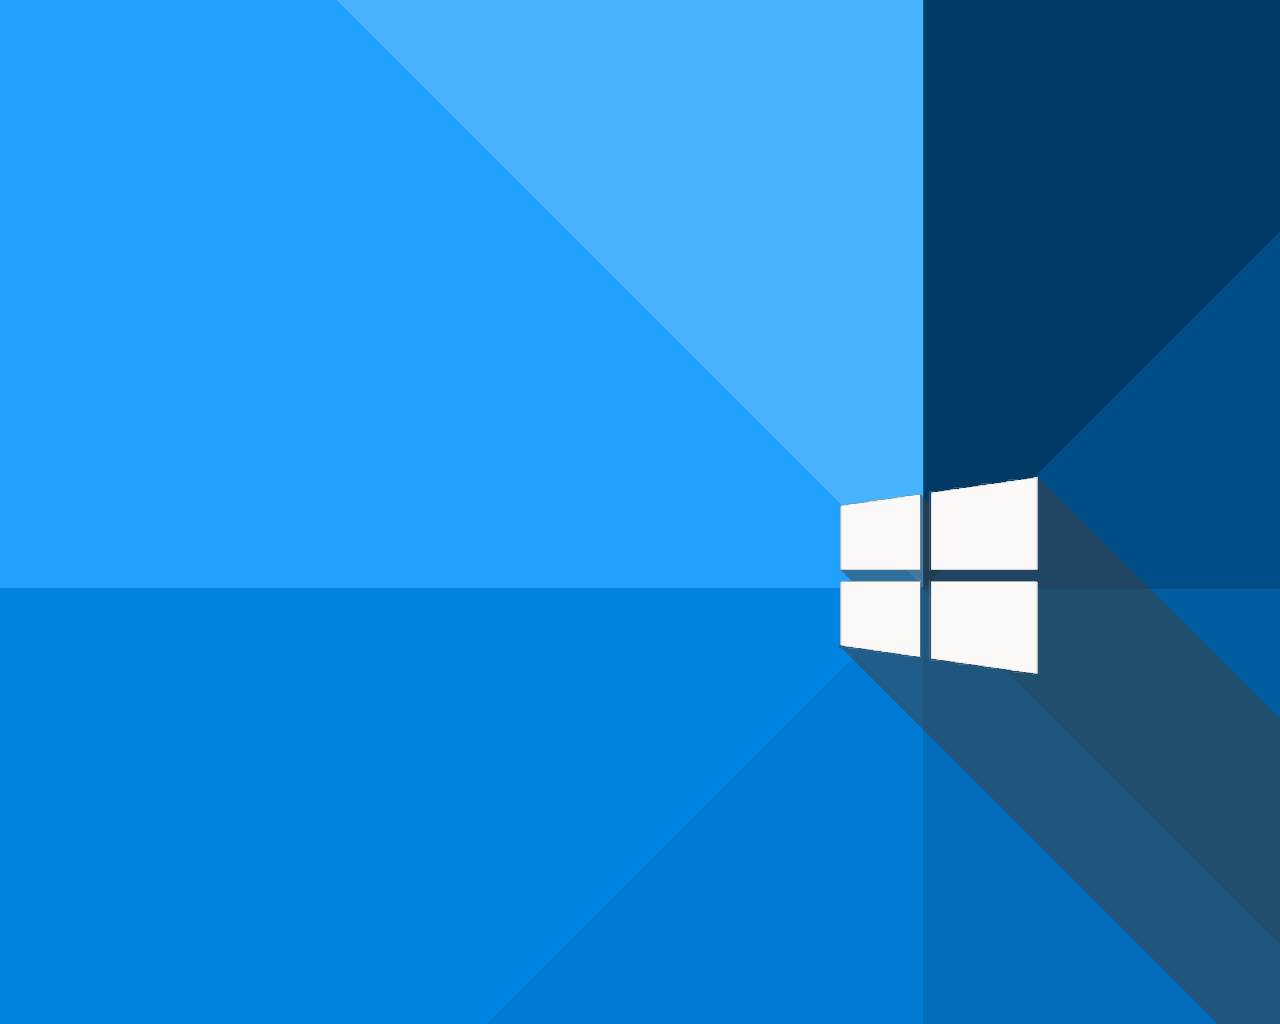 Windows 10 Material Design Wallpapers